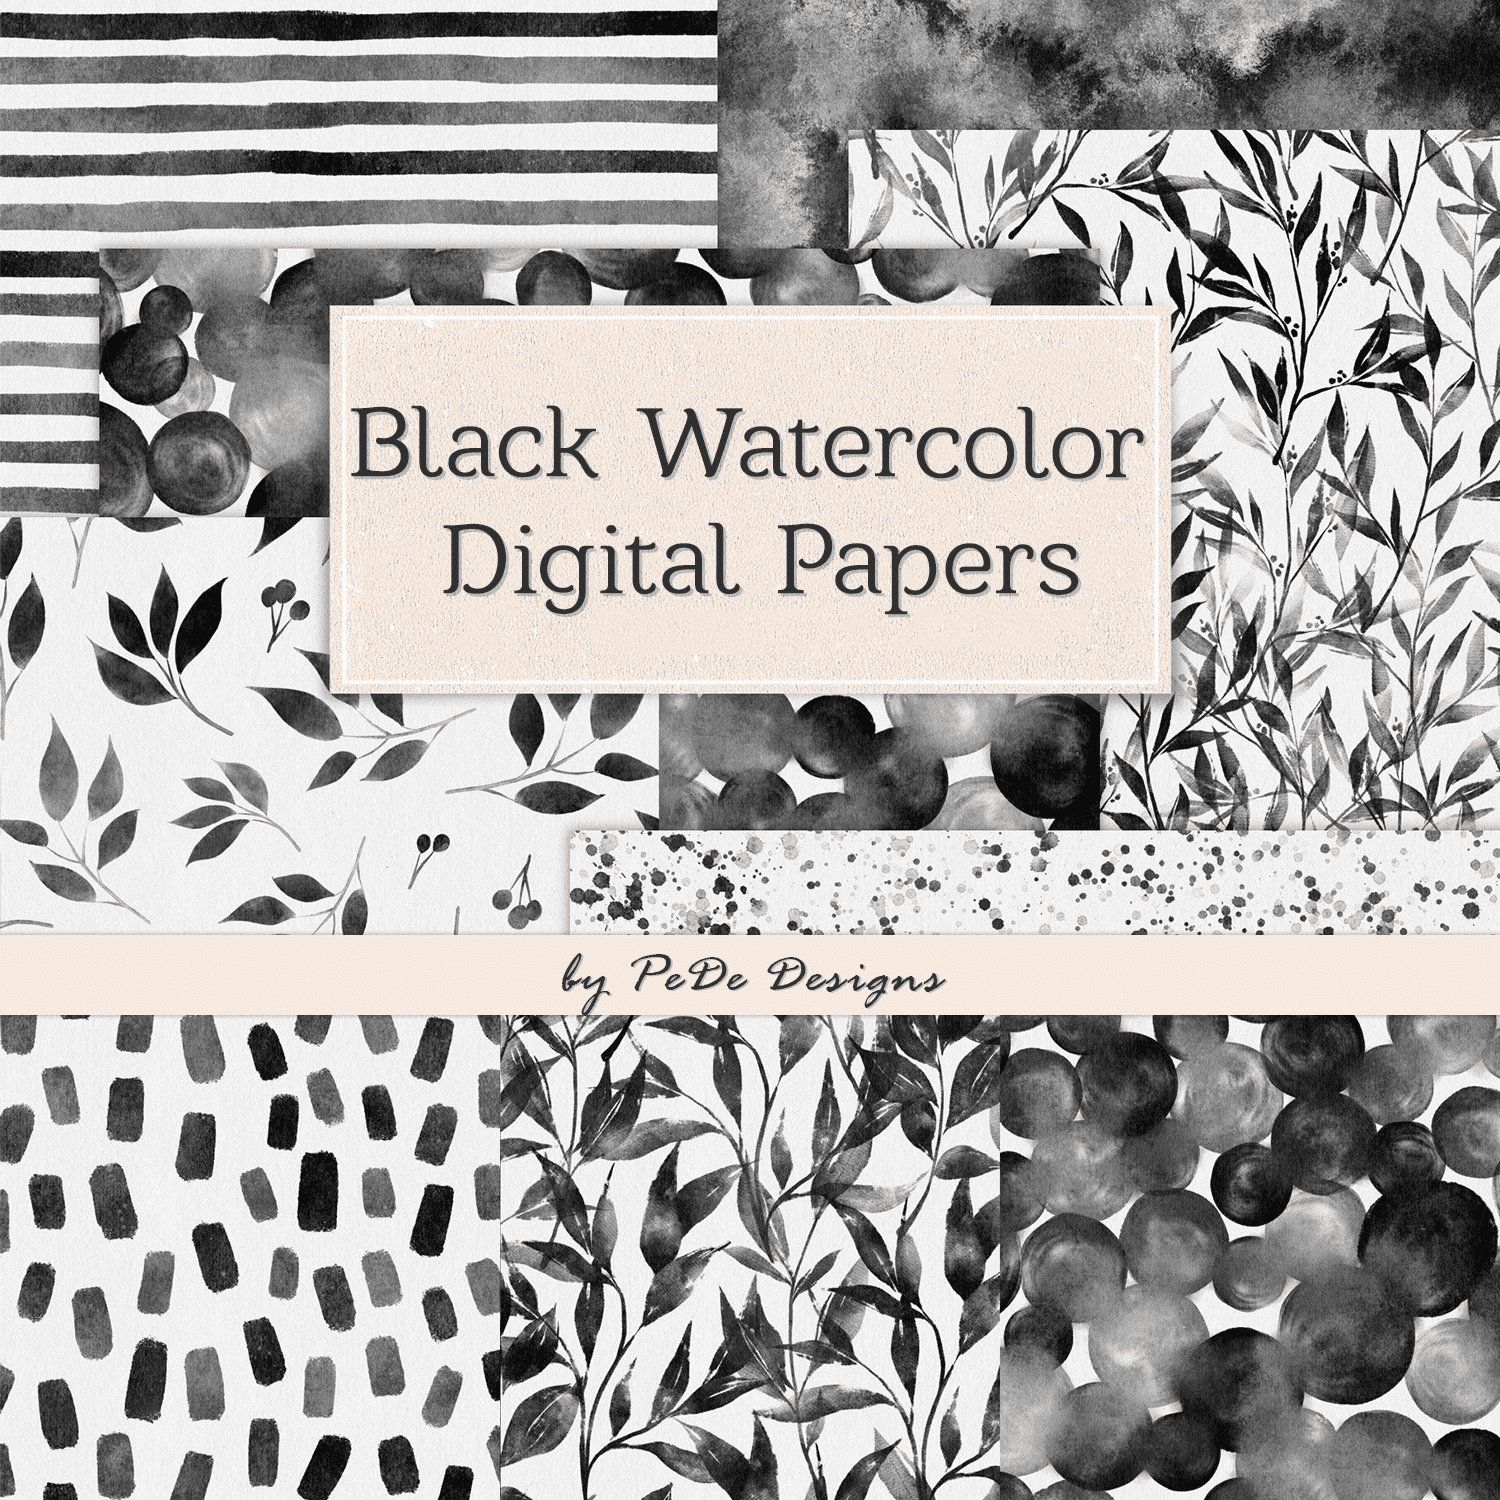 Black Watercolor Digital Papers cover.